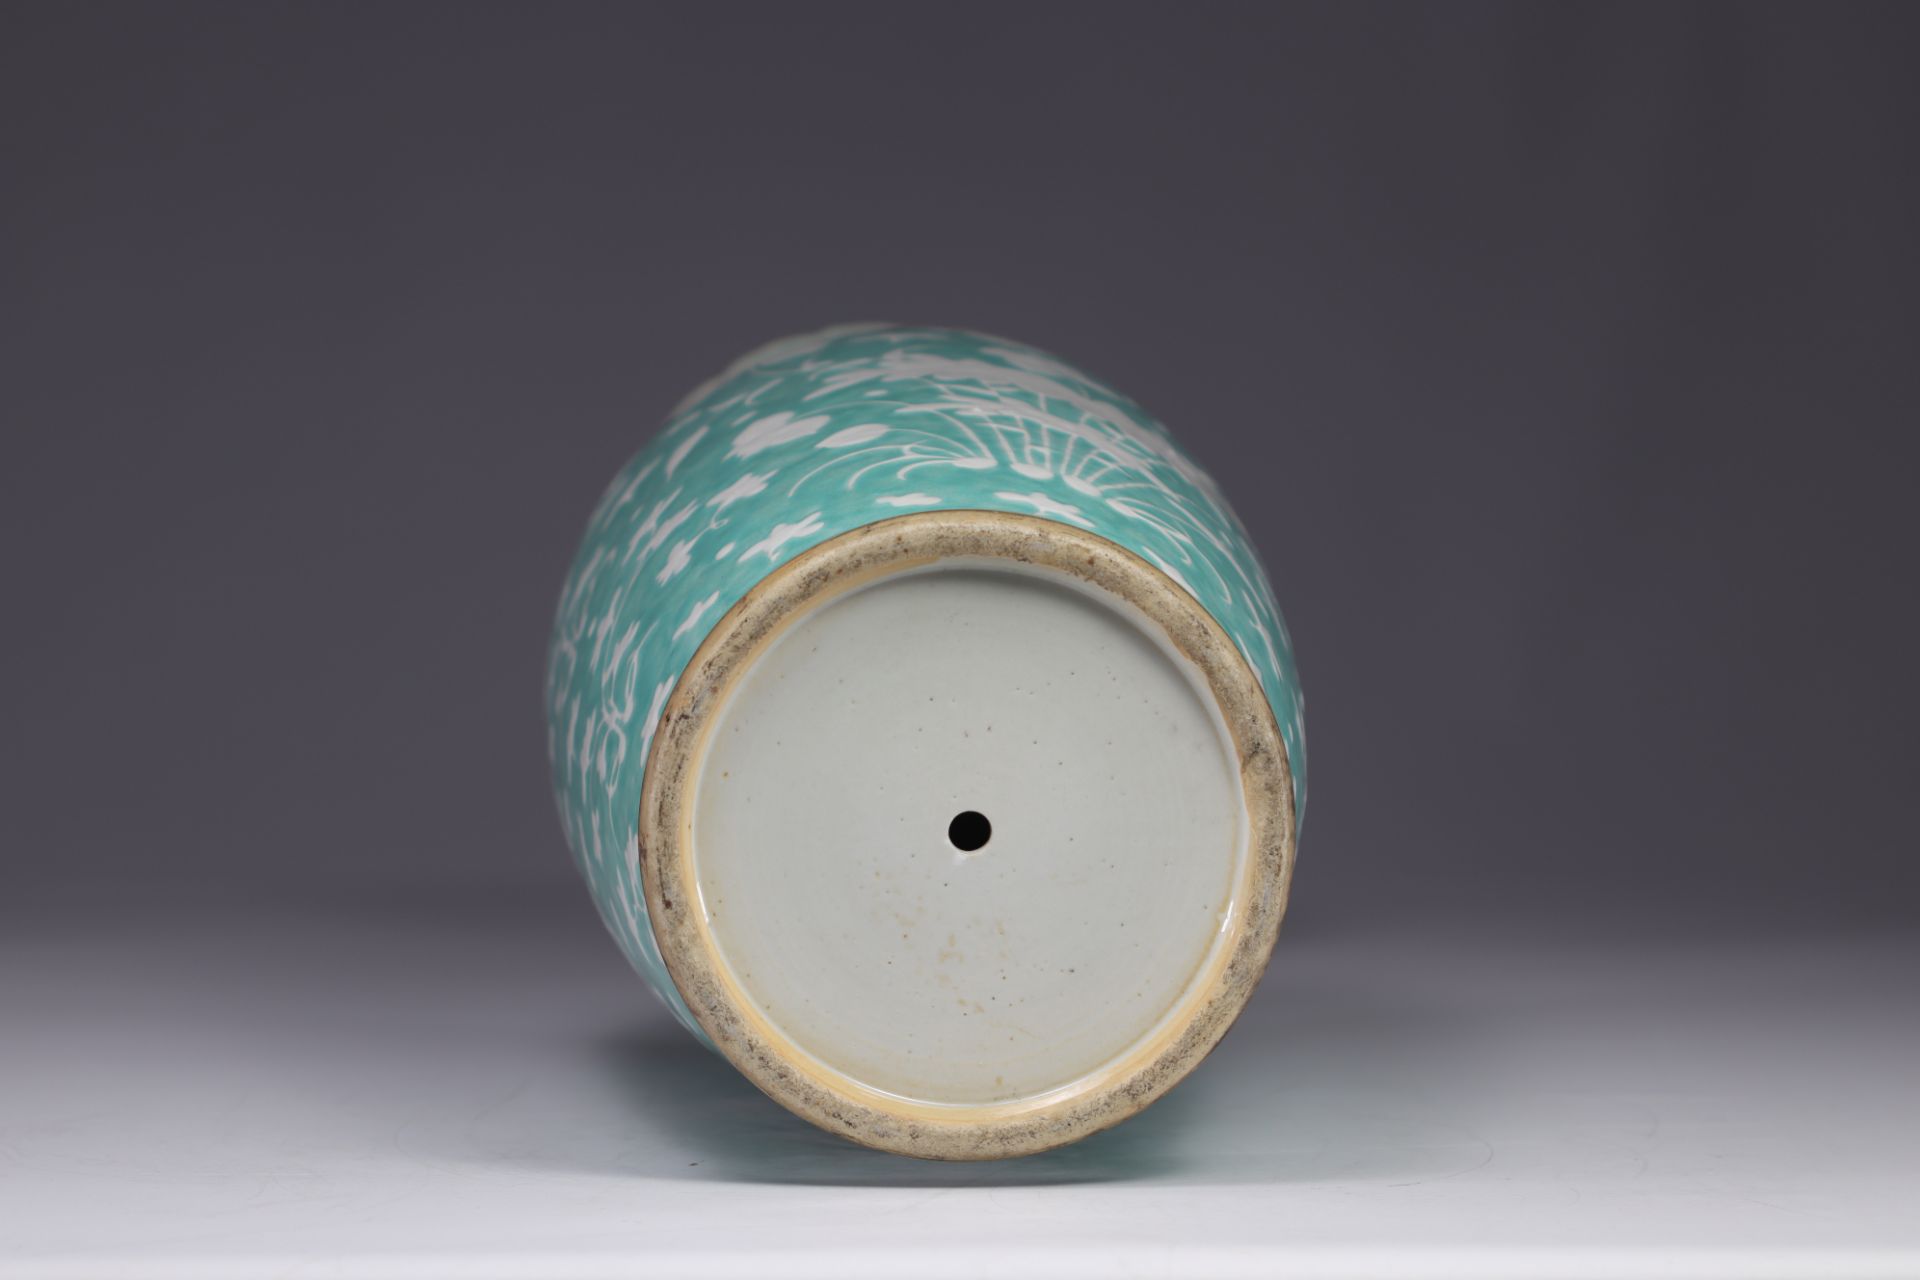 China - large porcelain vase decorated with flowers and birds, turquoise glaze, 19th century. - Image 6 of 6